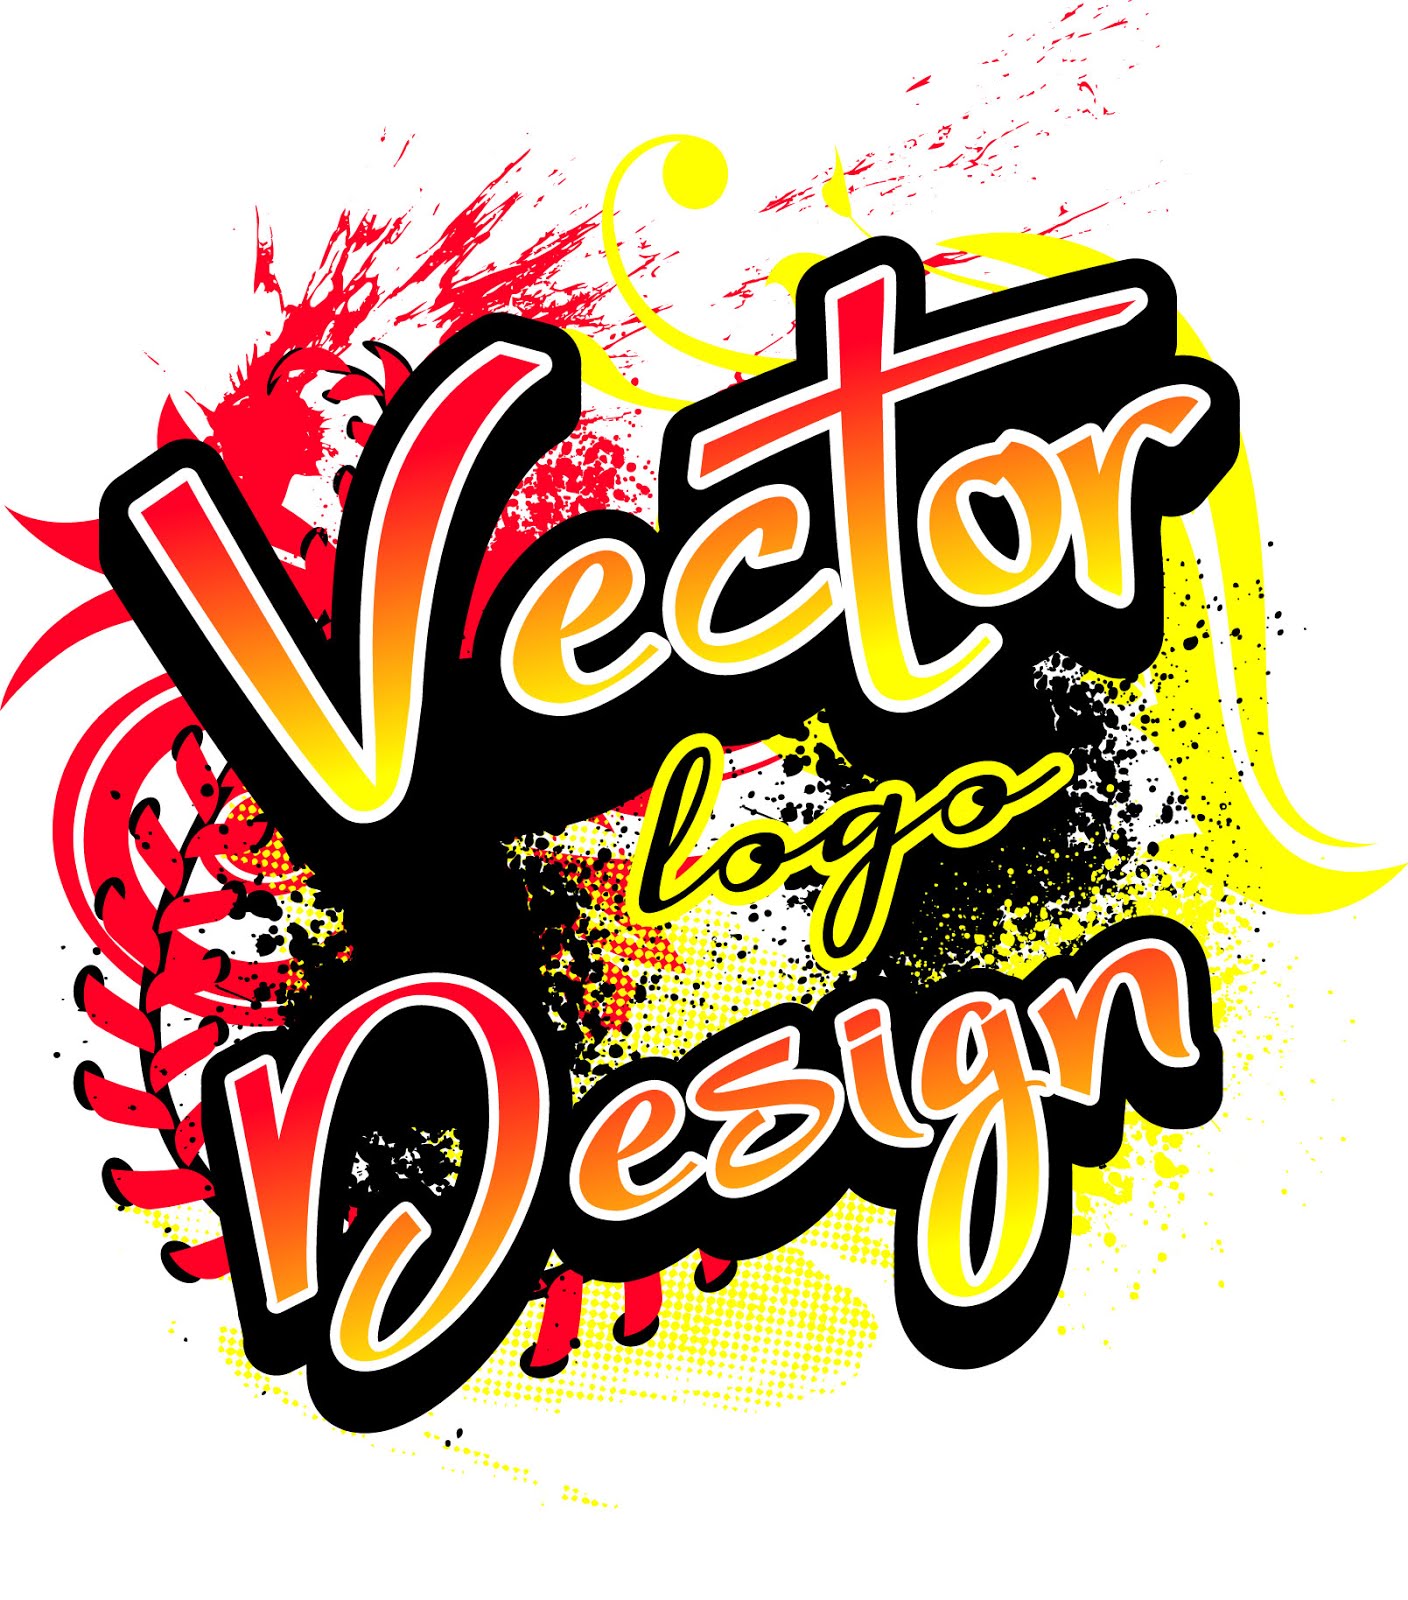 What is vector logo design?